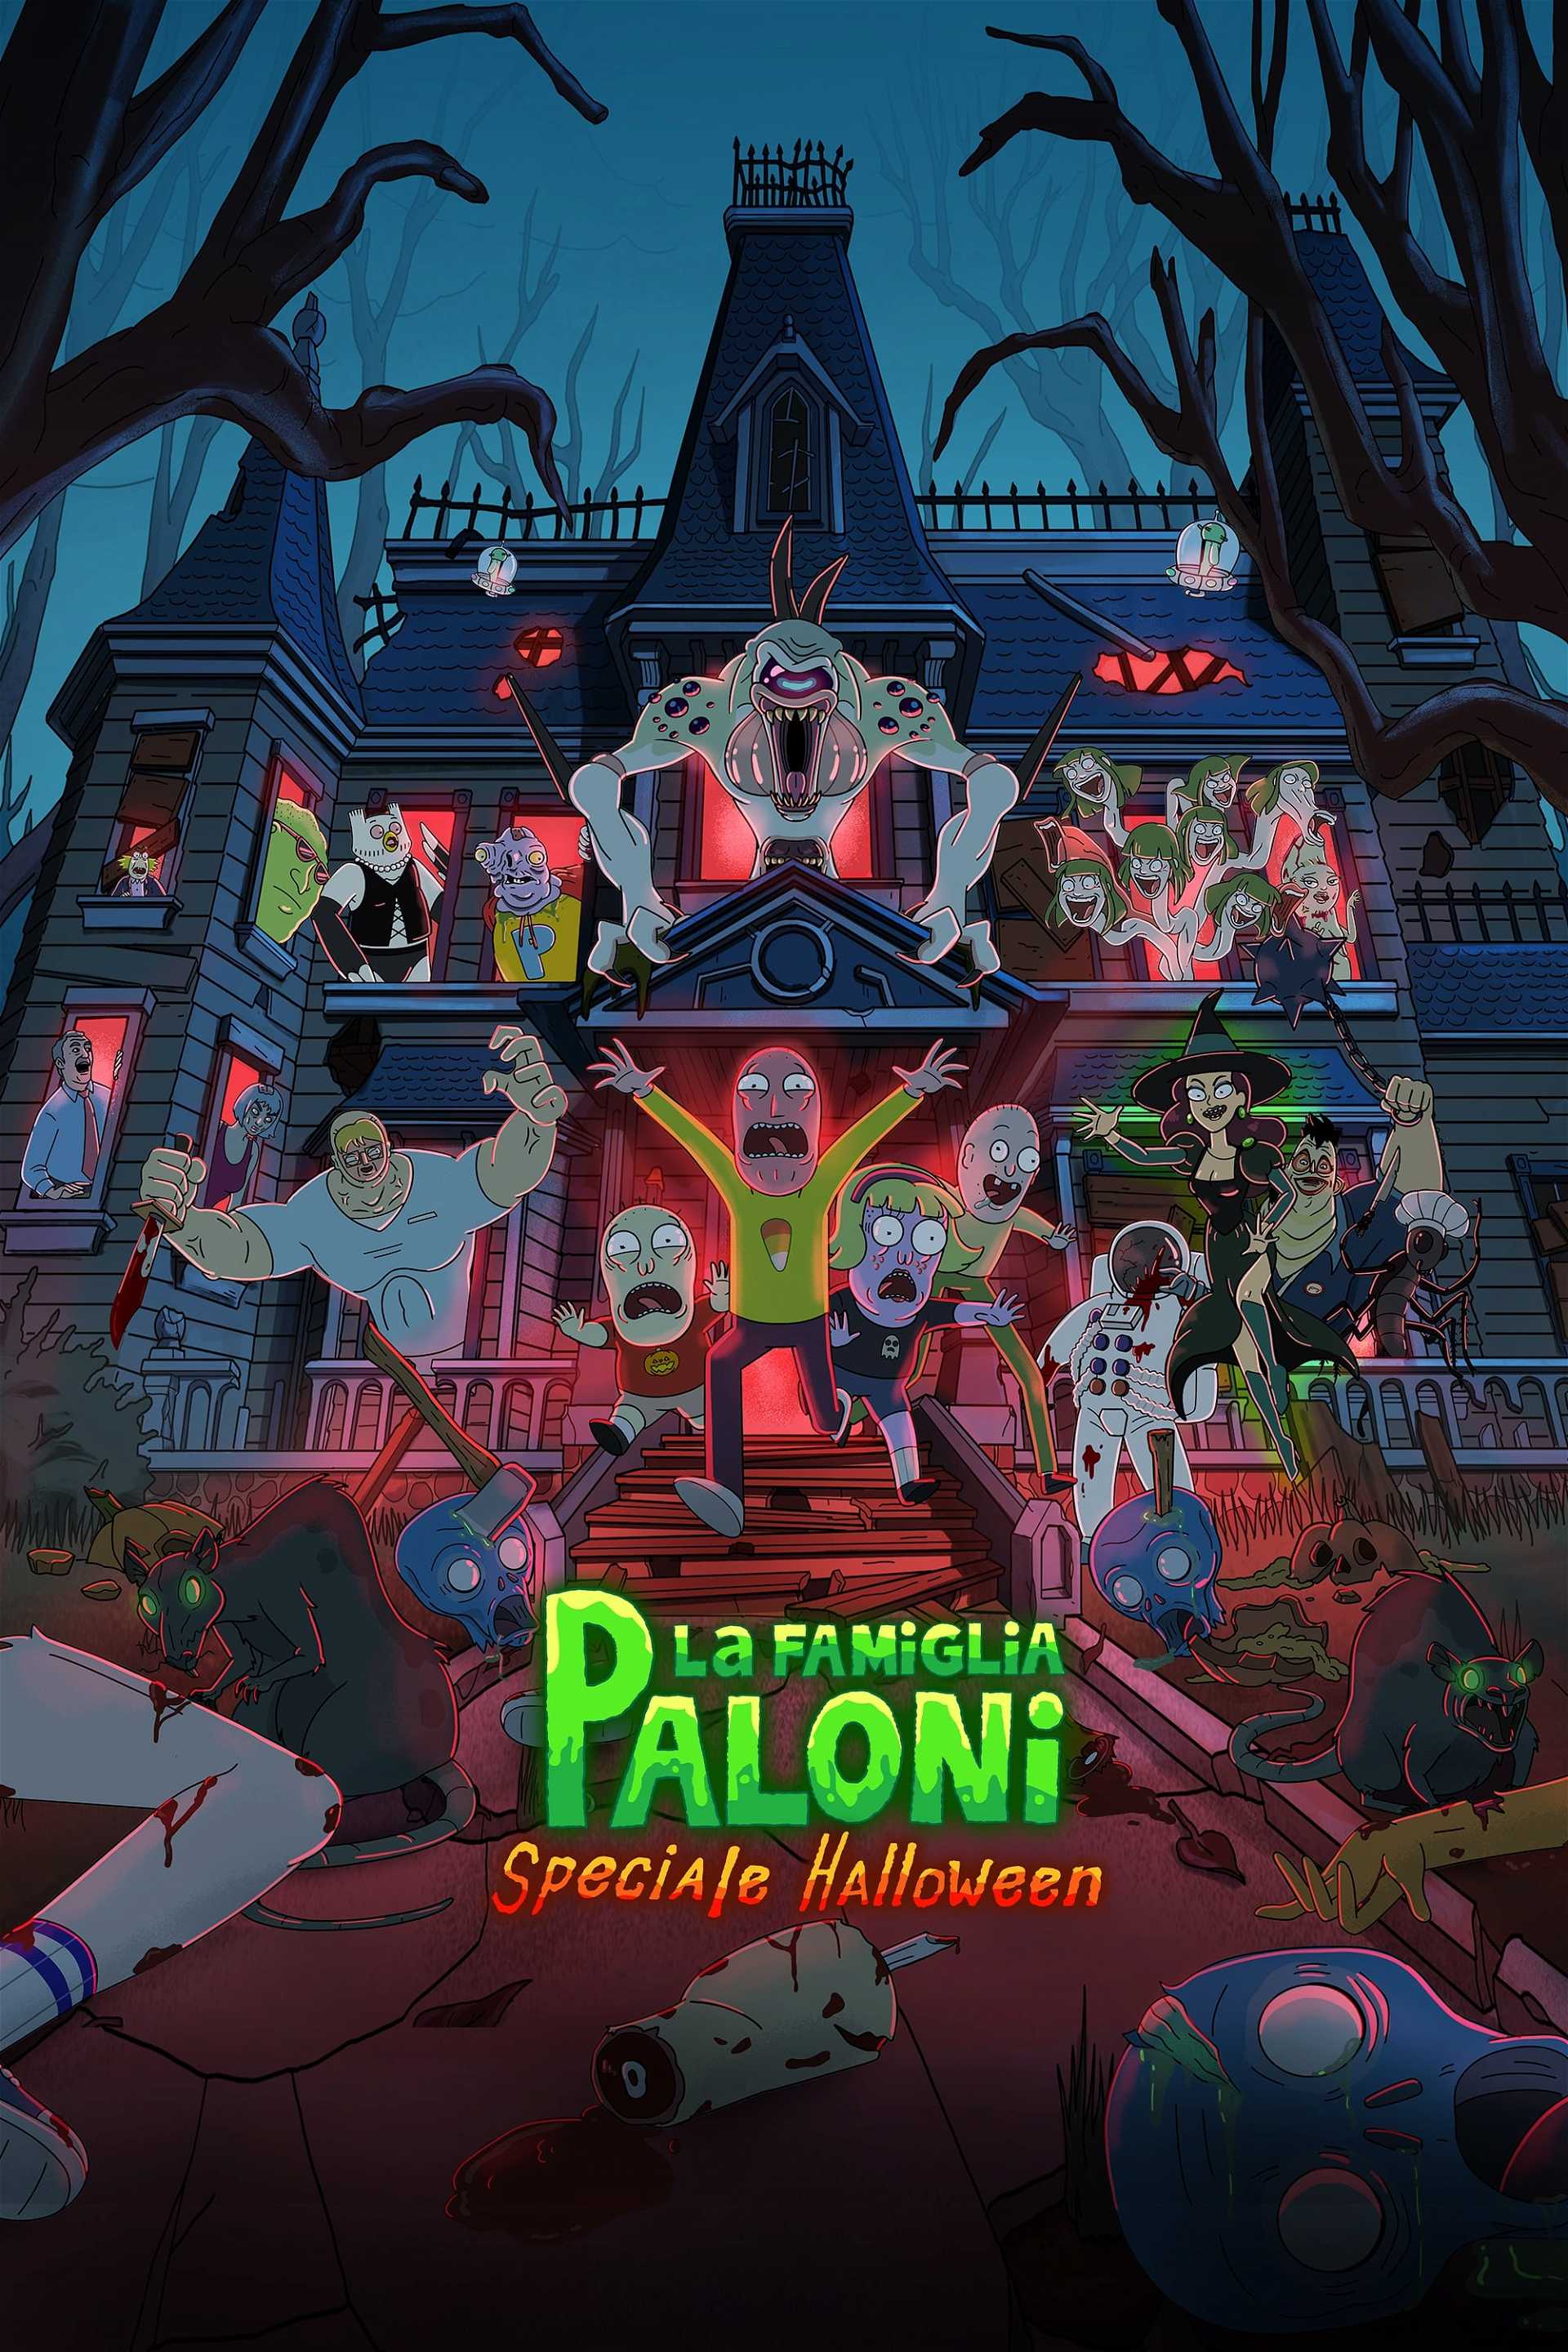 La famiglia Paloni: speciale Halloween in streaming